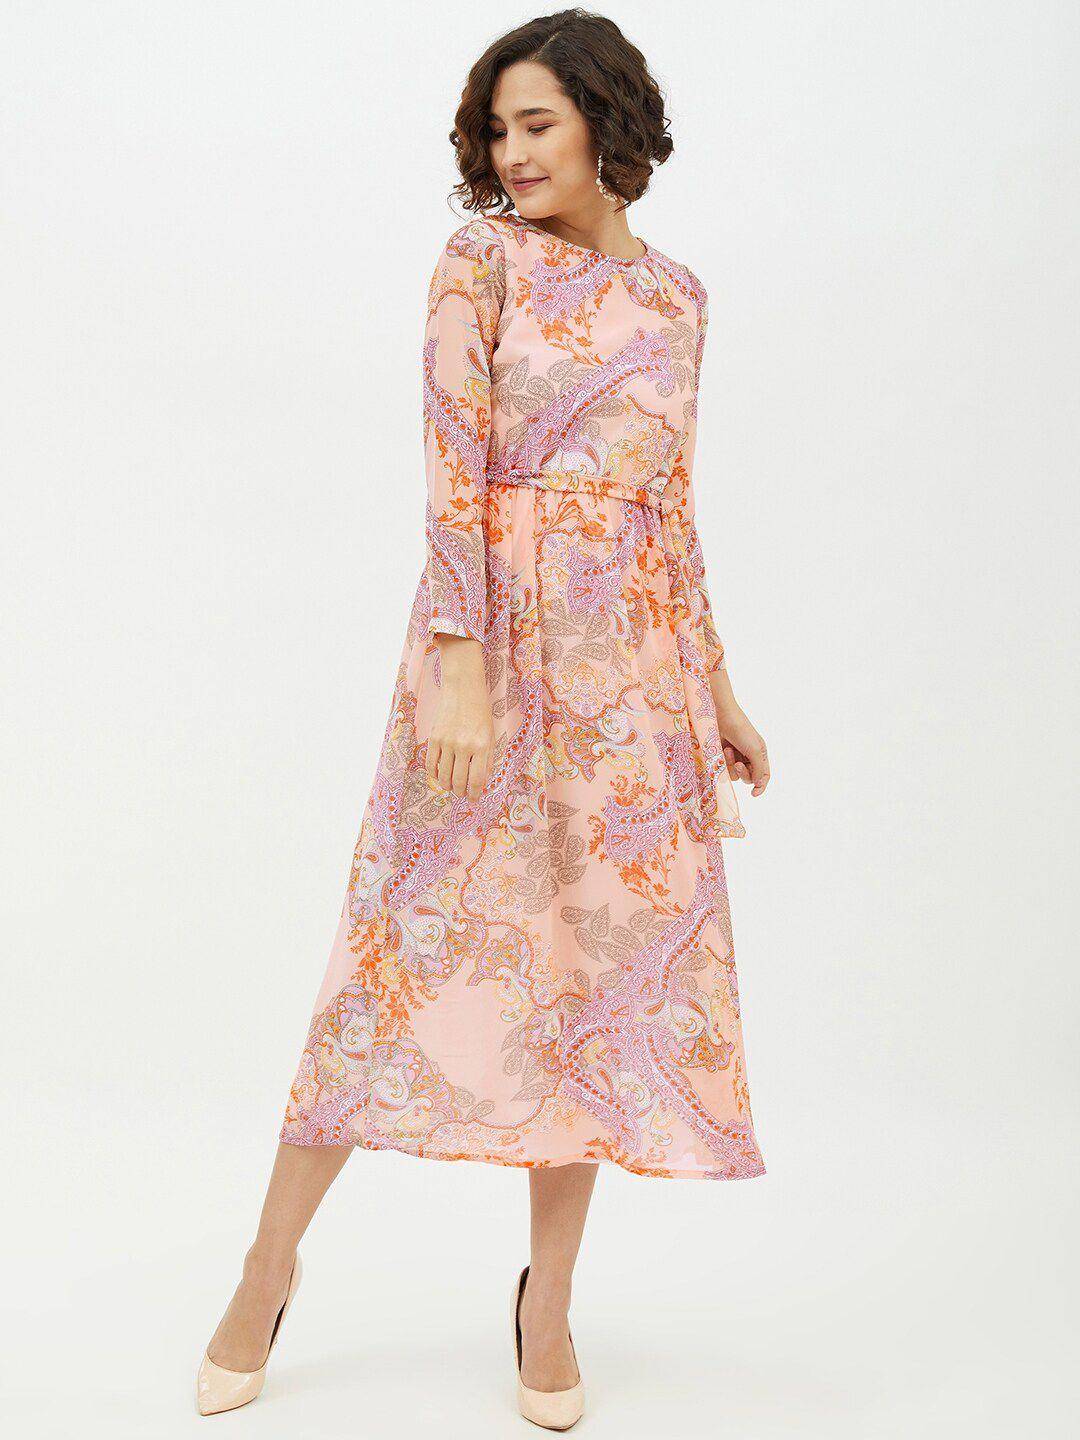 stylestone-peach-printed-georgette-midi-dress